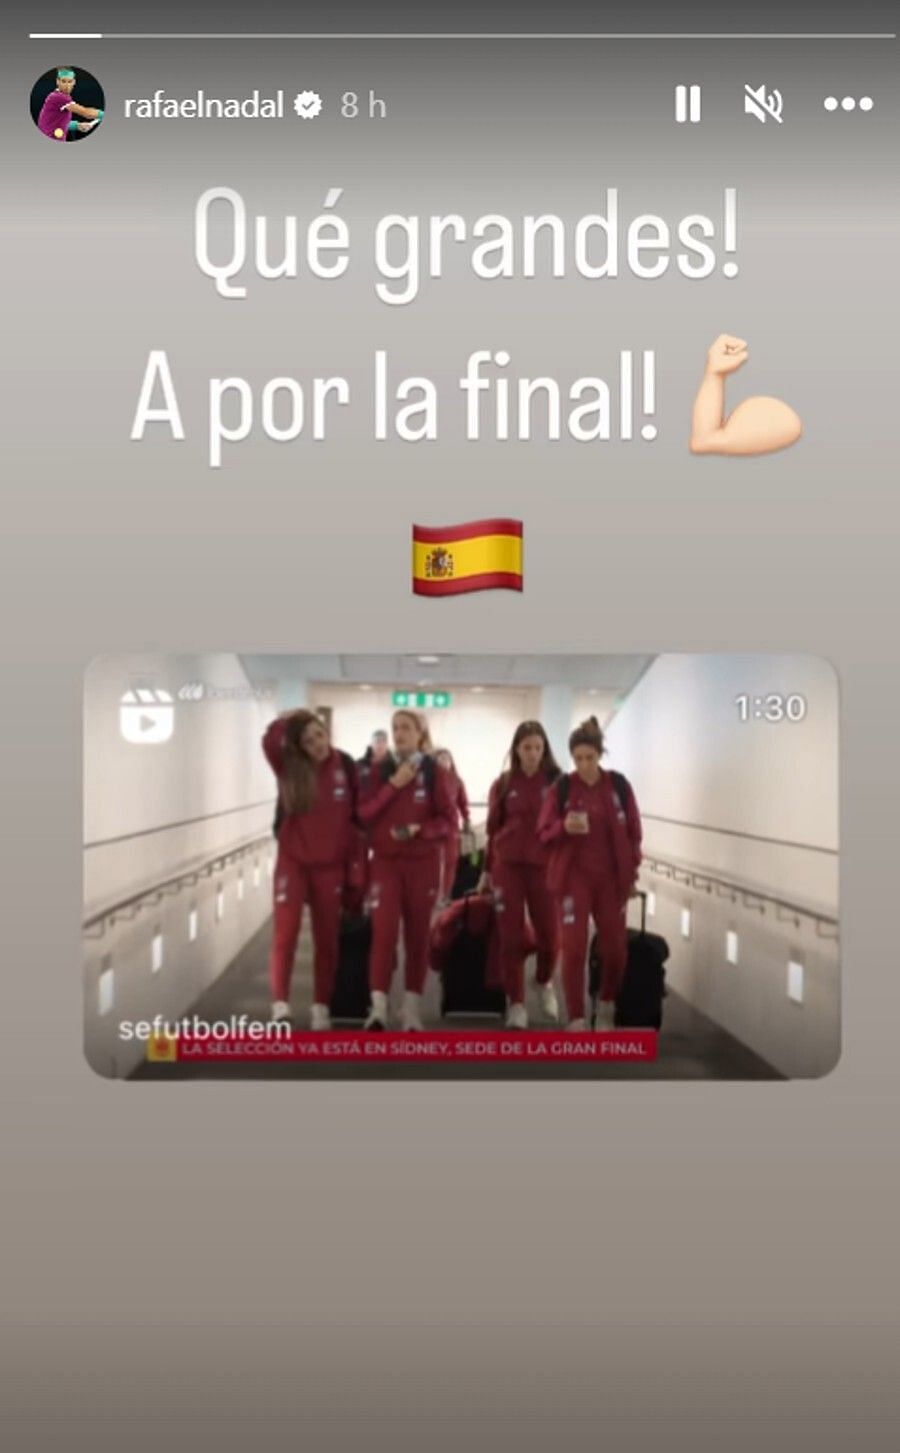 Rafael Nadal on Instagram